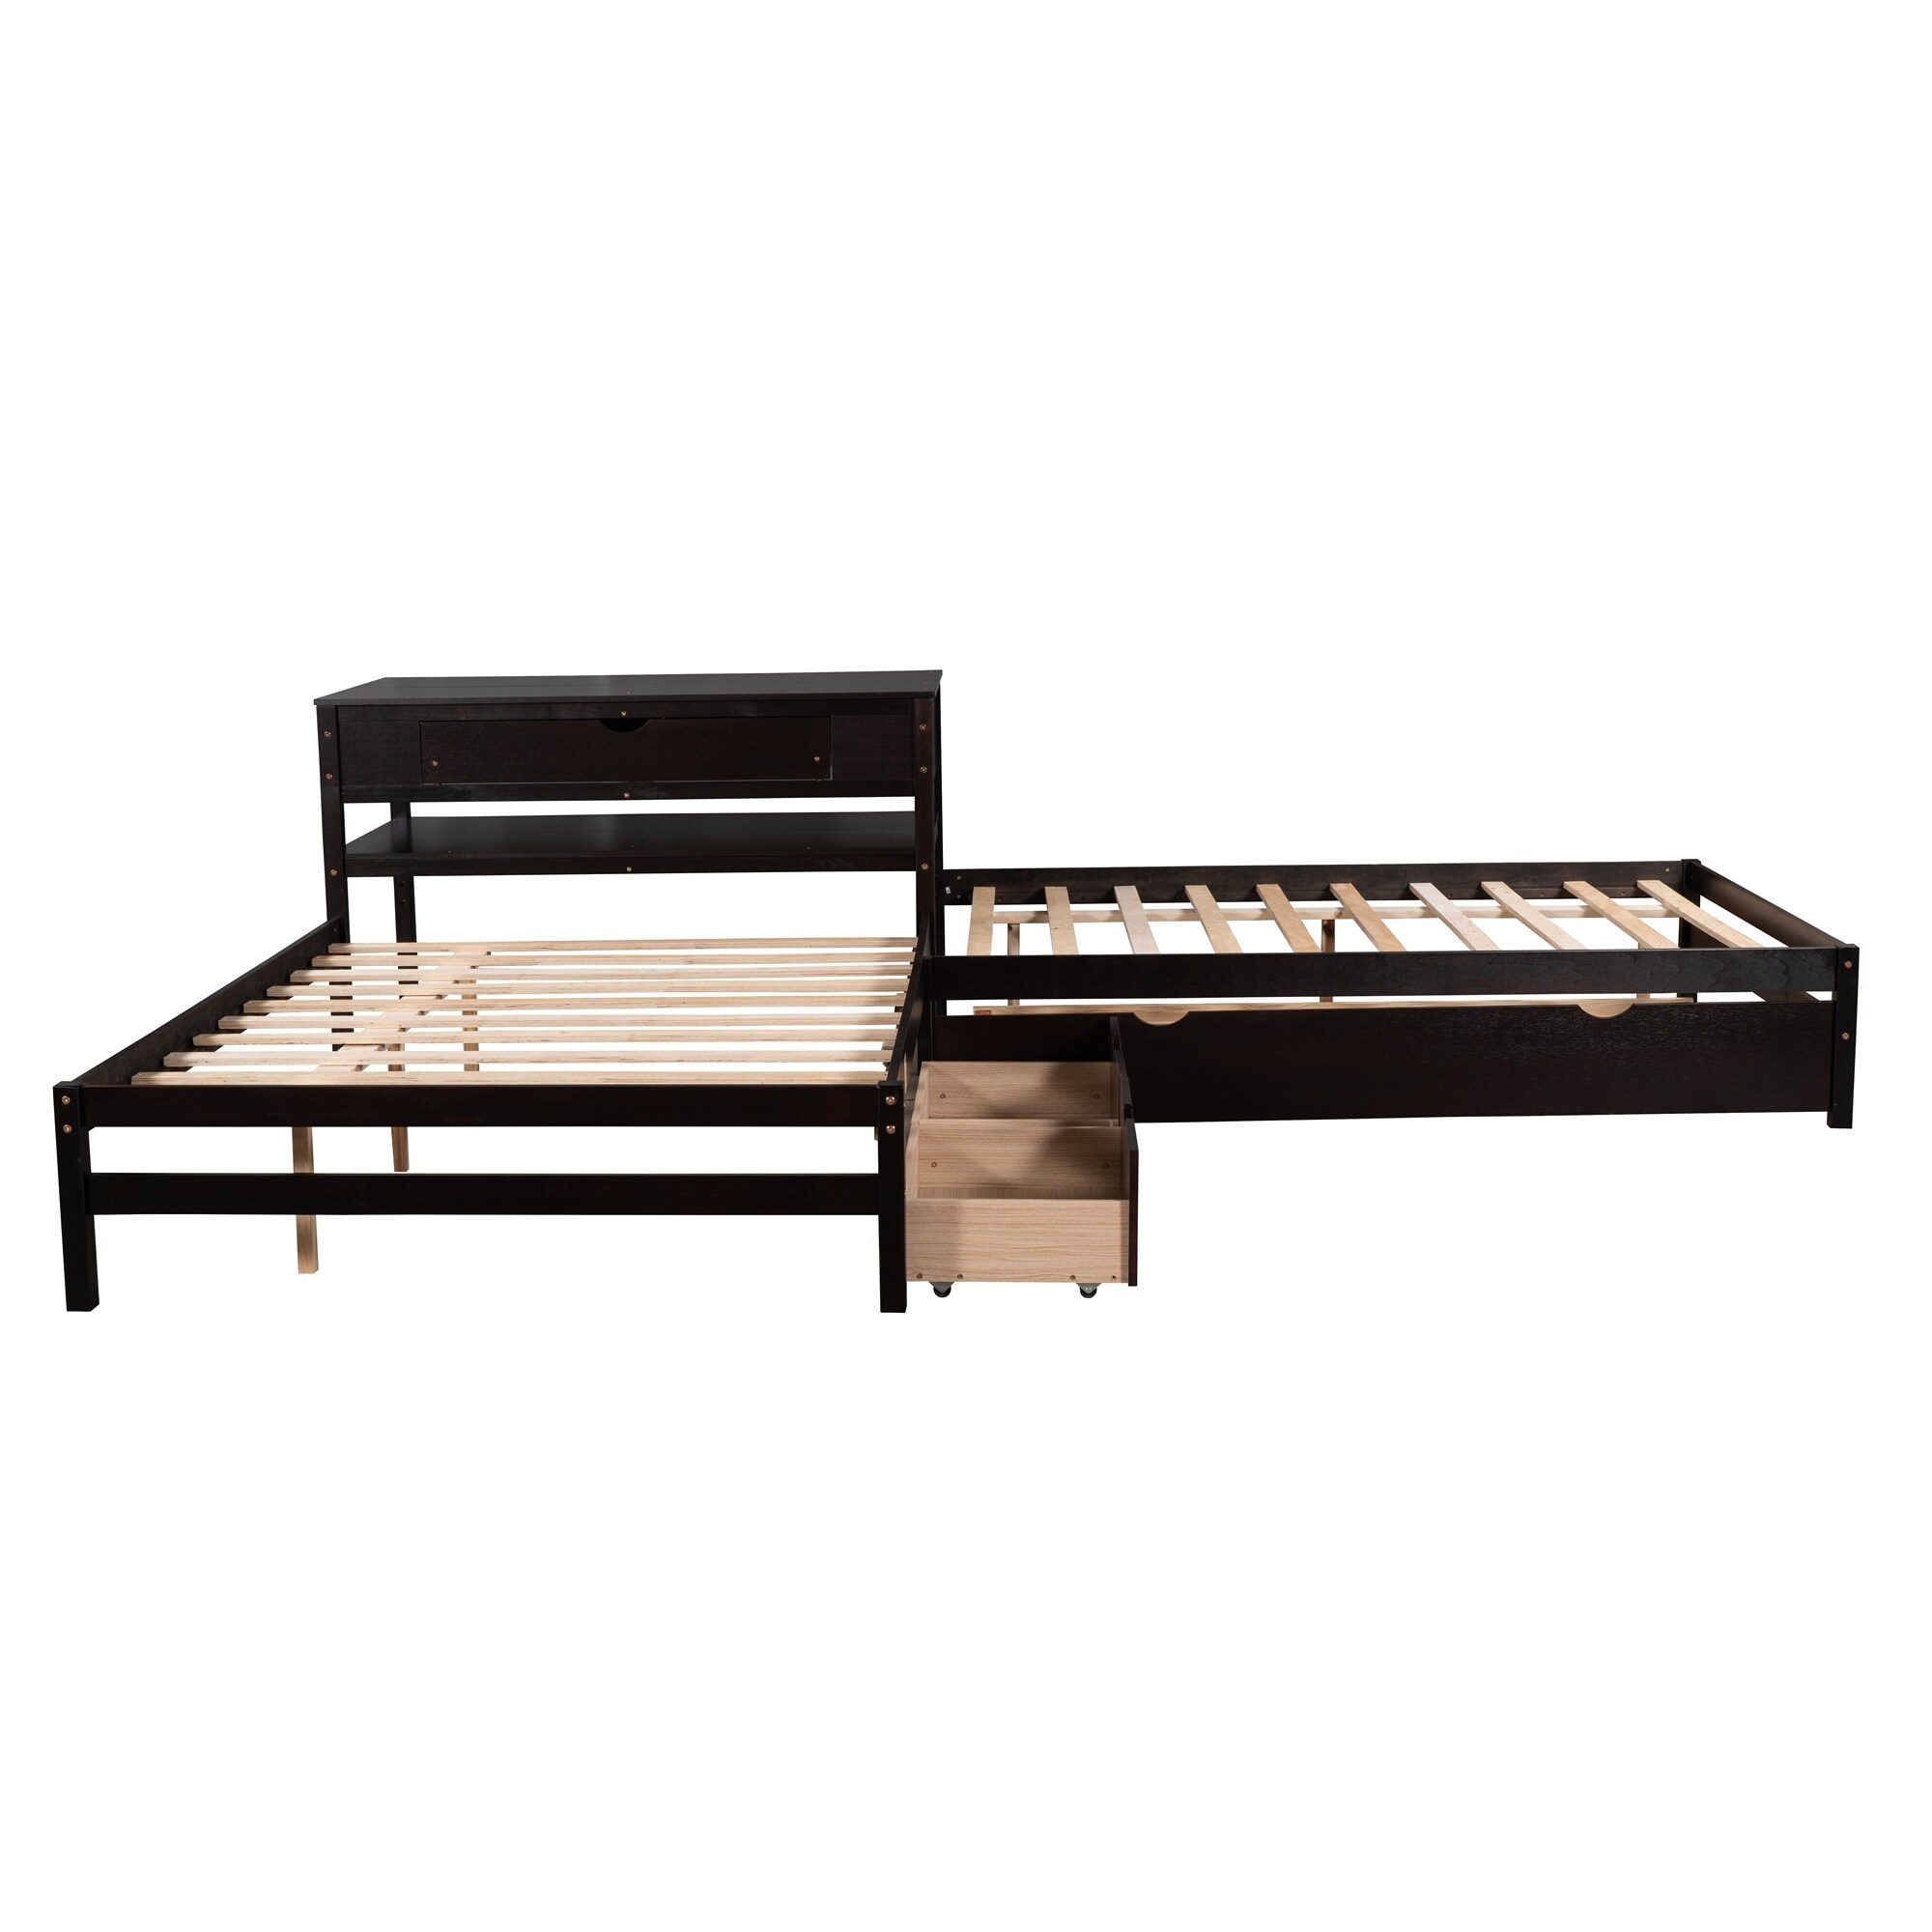 3 in 1 Design L-Shaped Corner Platform Beds with 1 Desk&1 Trundle&2 Drawers for Small Bedroom City Aprtment Dorm